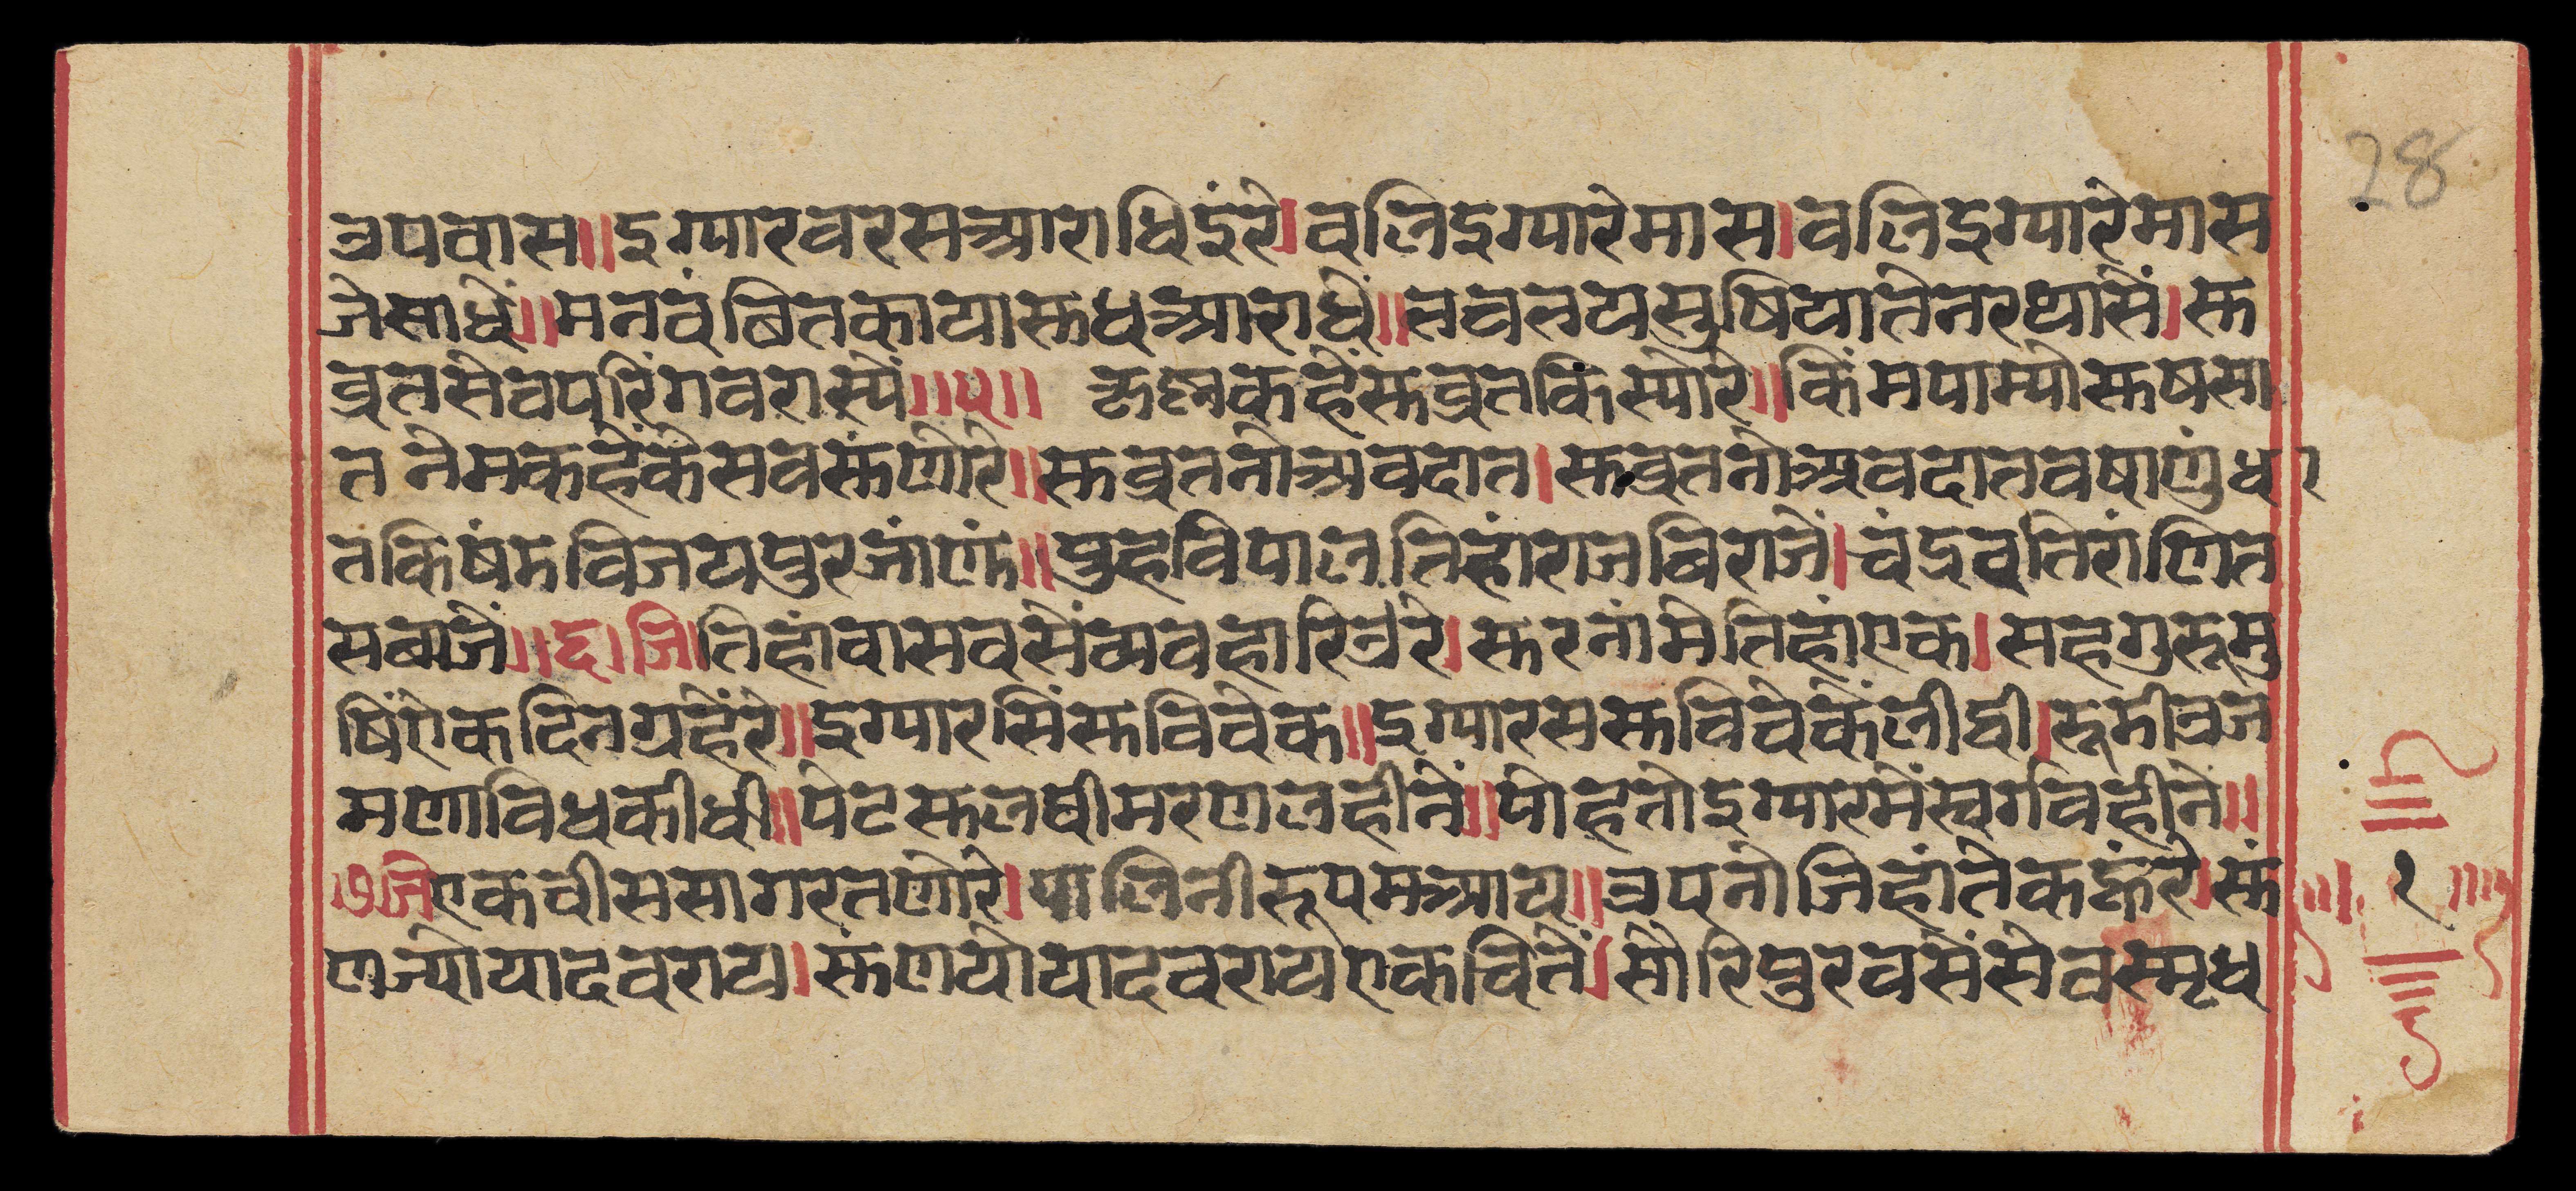 Sanskrit hymn in 25 stanzas